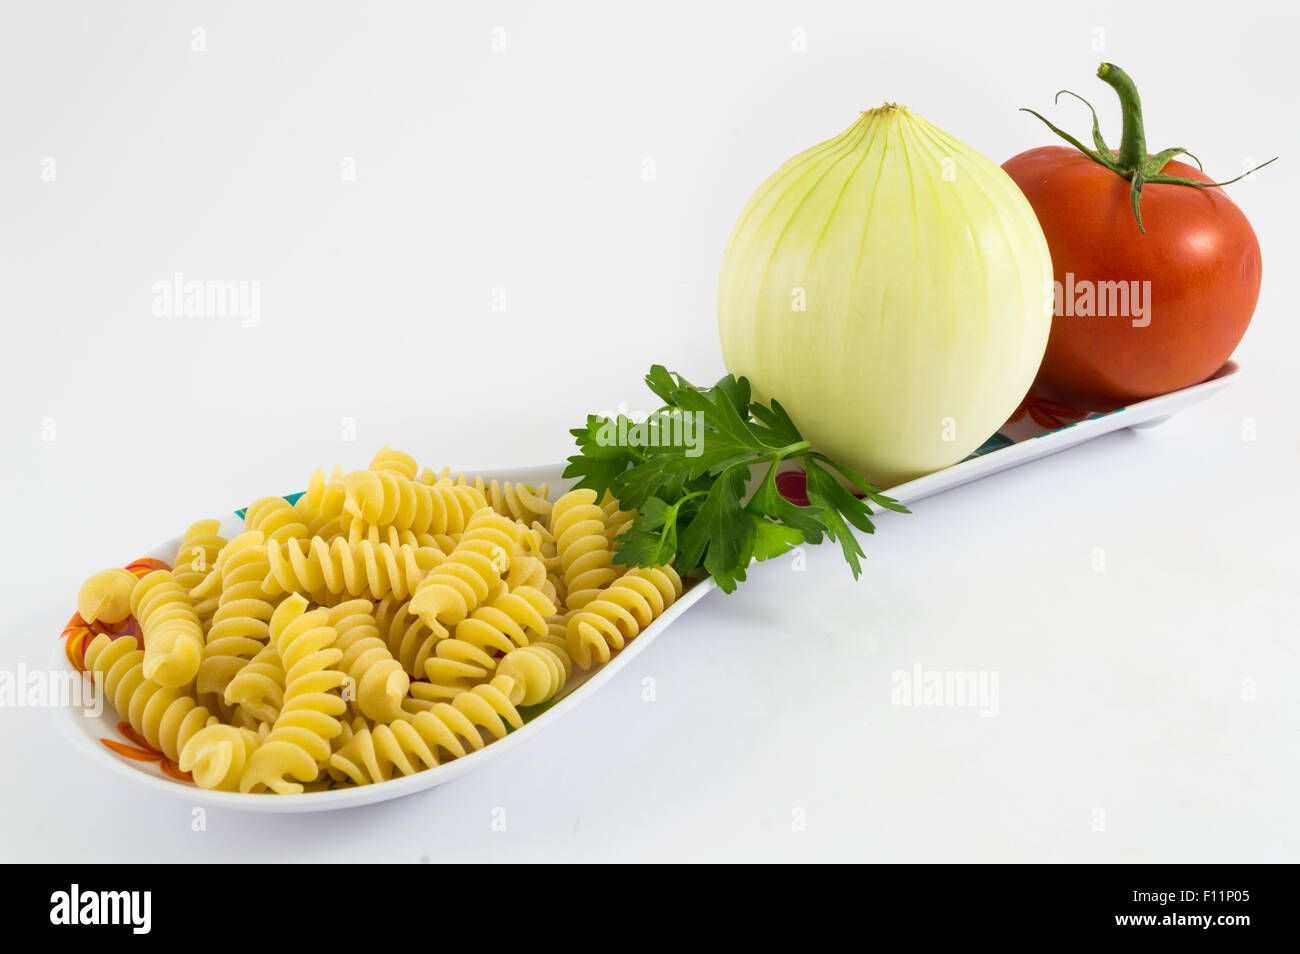 onion, tomato, parsley and pasta on white background Stock Photo